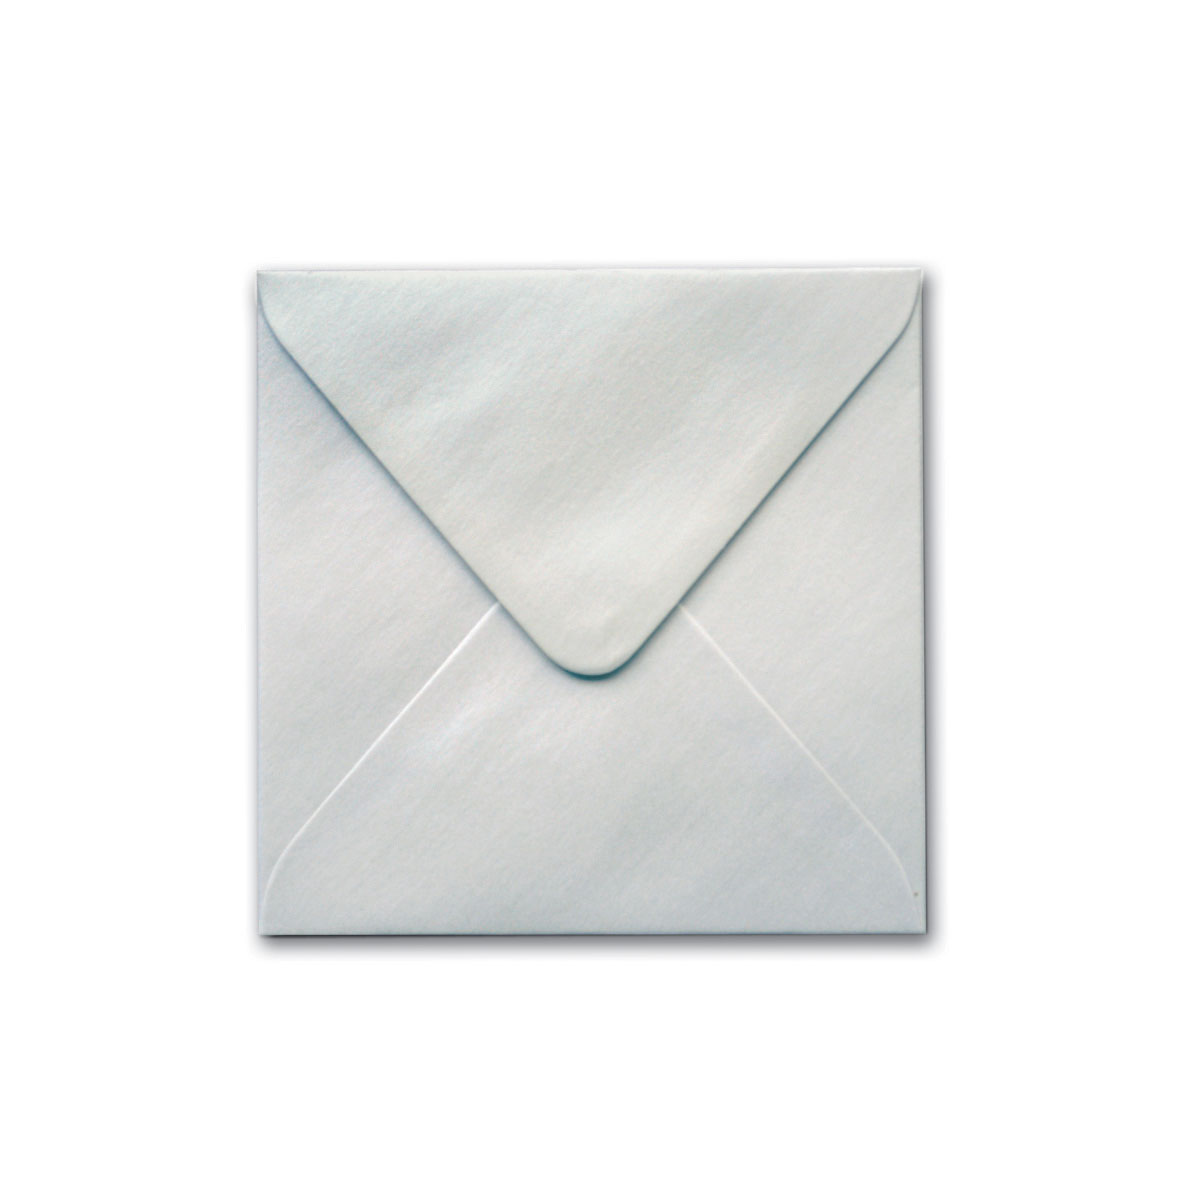 150mm Square StarDream Silver Envelope